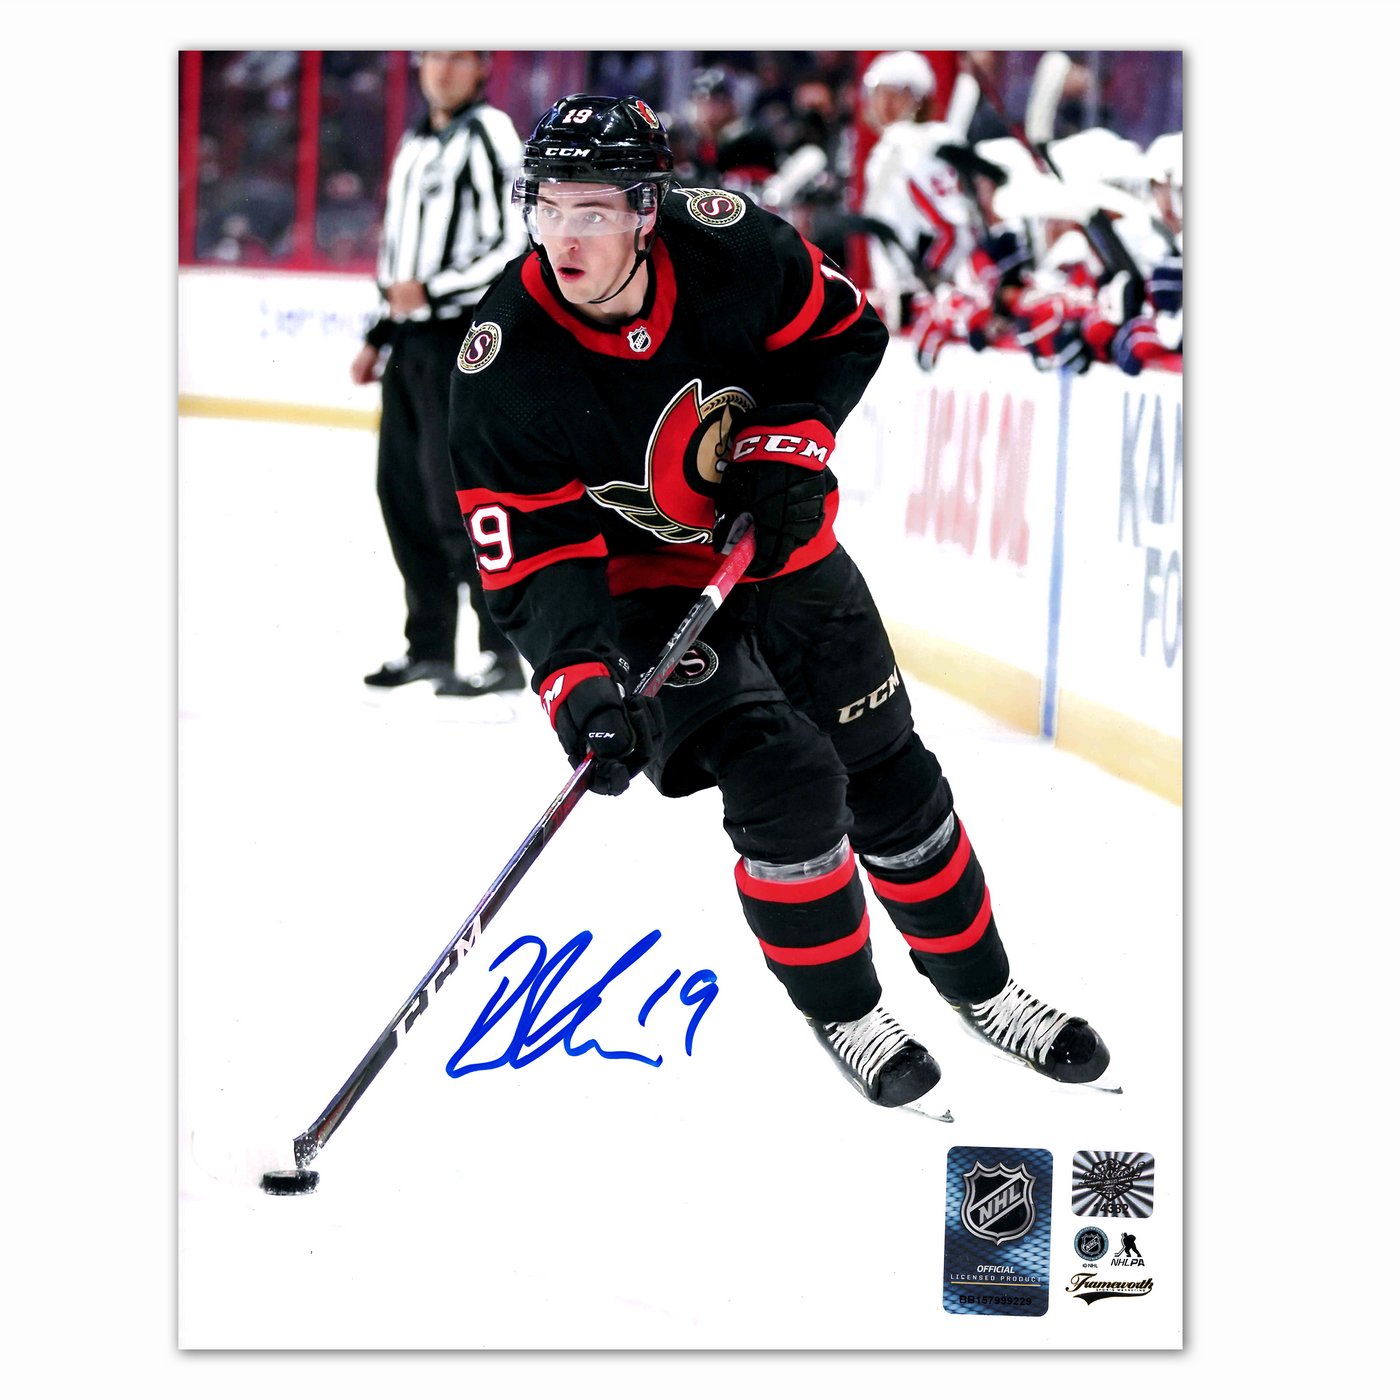 Drake Batherson Autographed Ottawa Senators Home 8x10 Photo